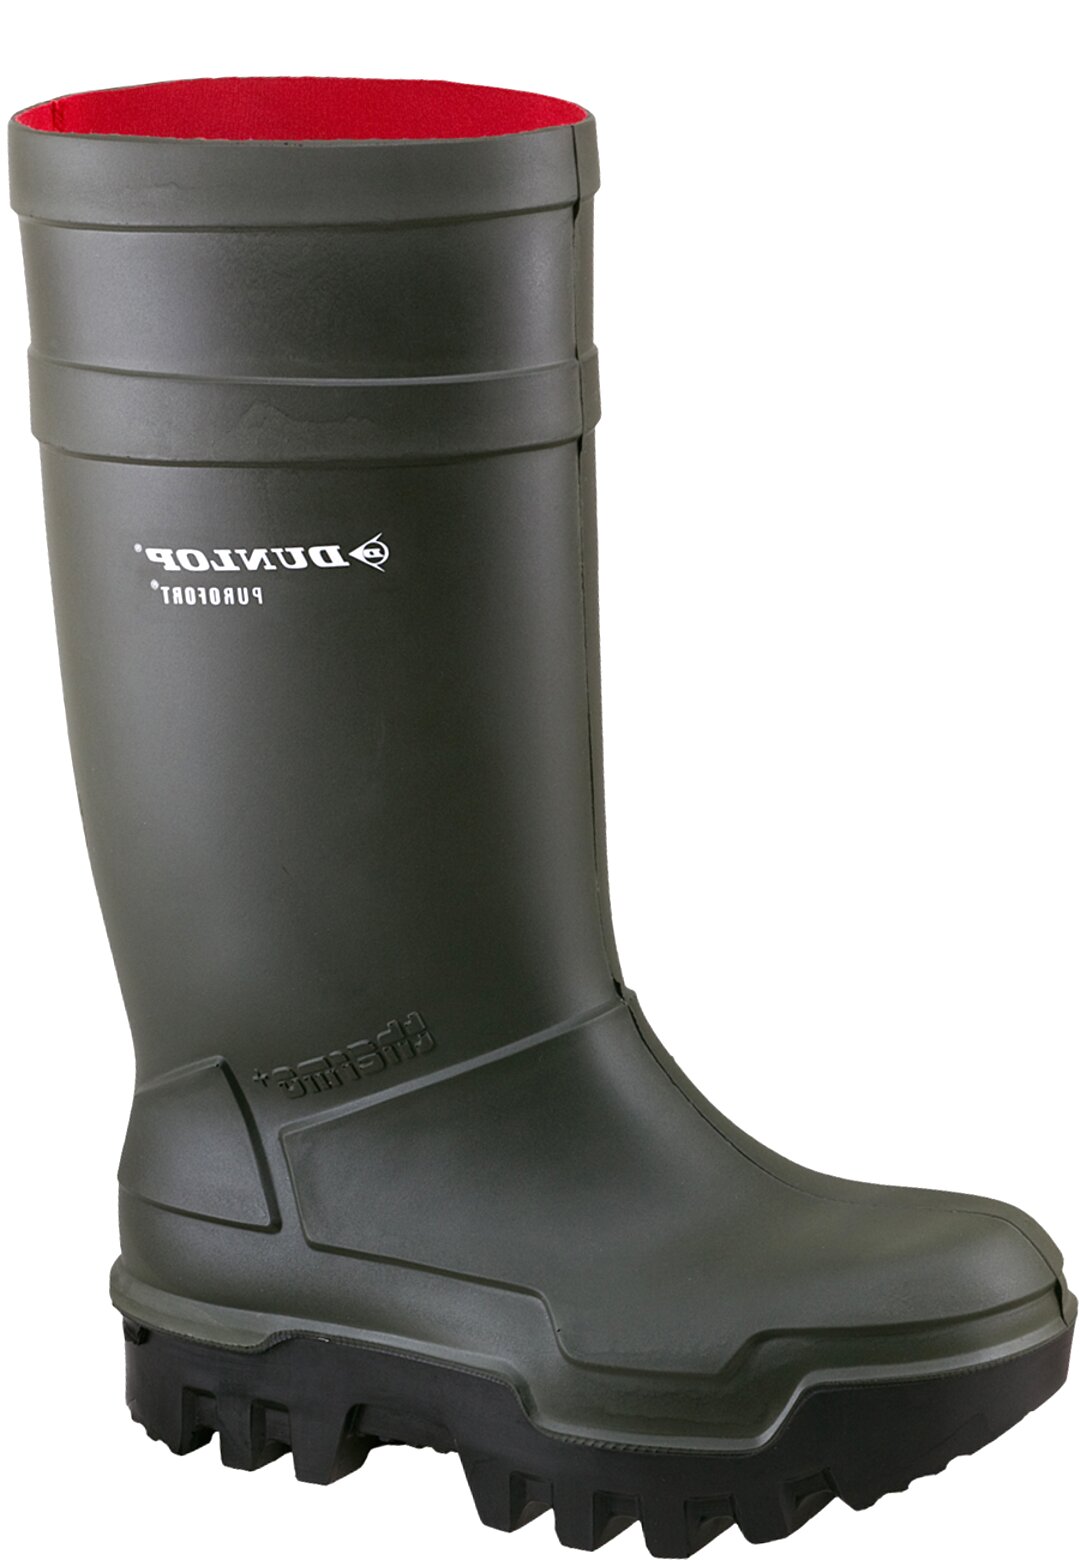 steel toe capped wellington boots